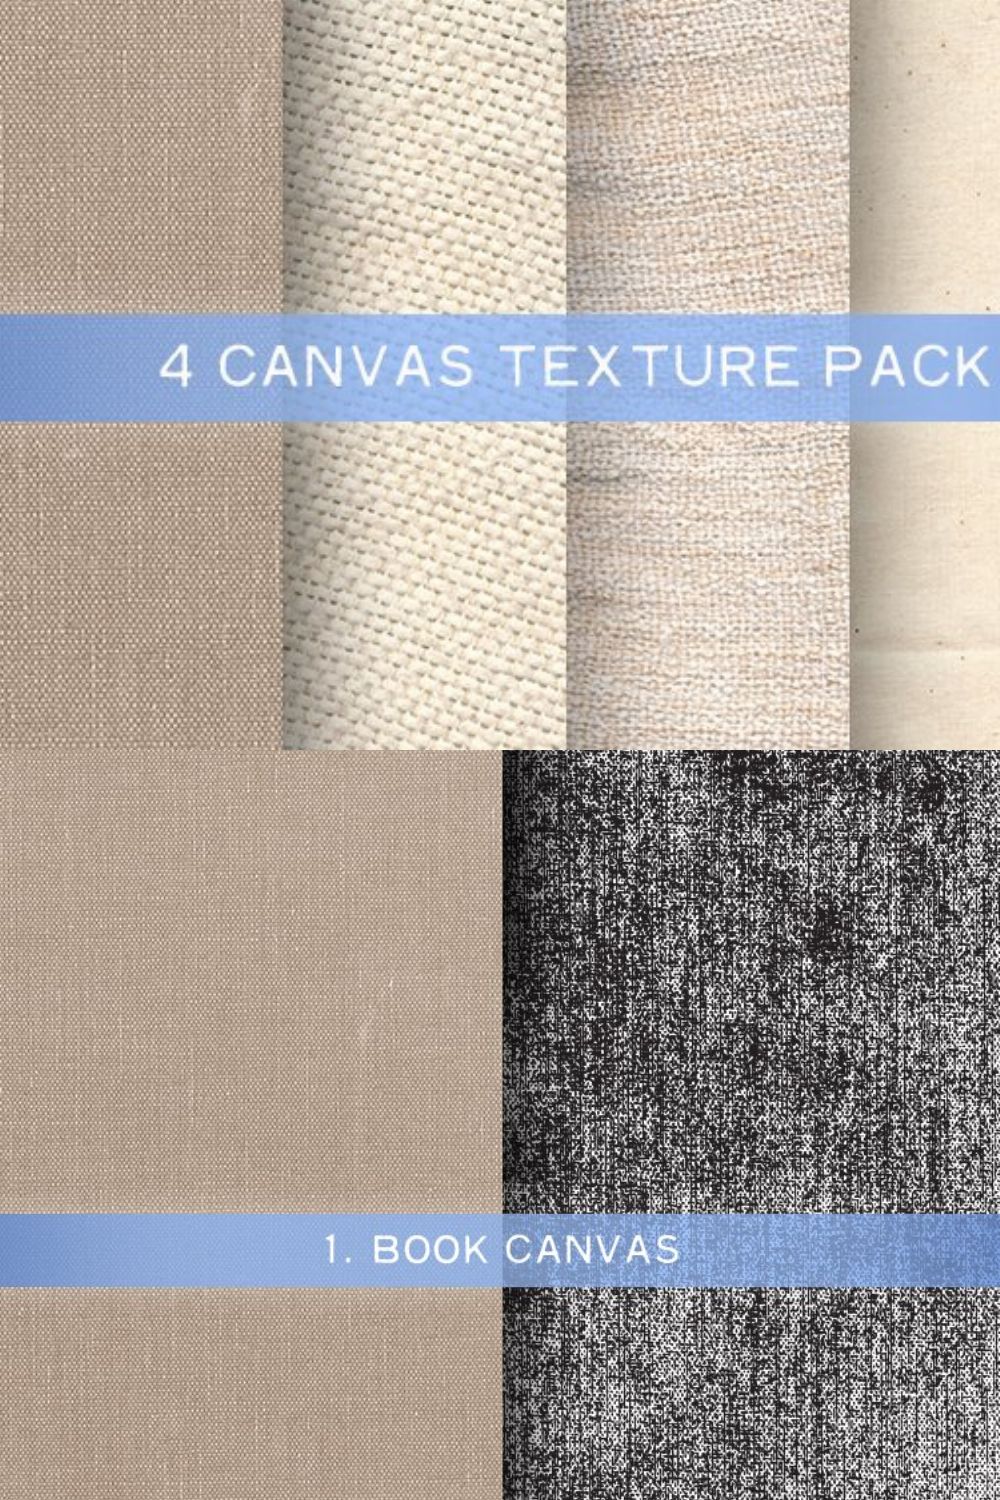 4 Canvas Texture Pack pinterest preview image.